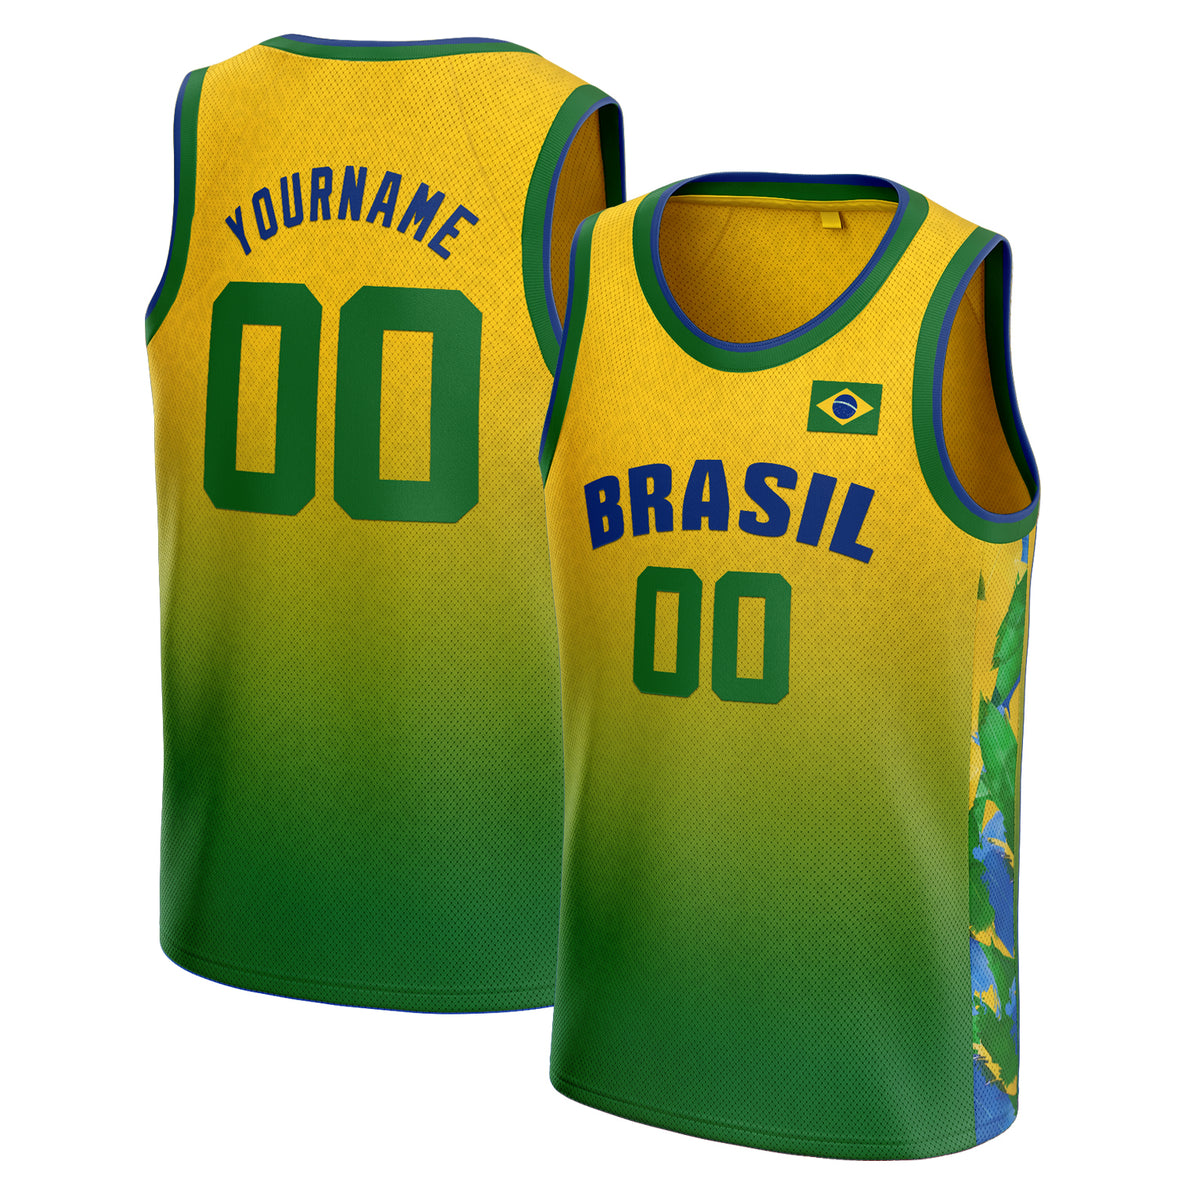 brazil basketball jersey